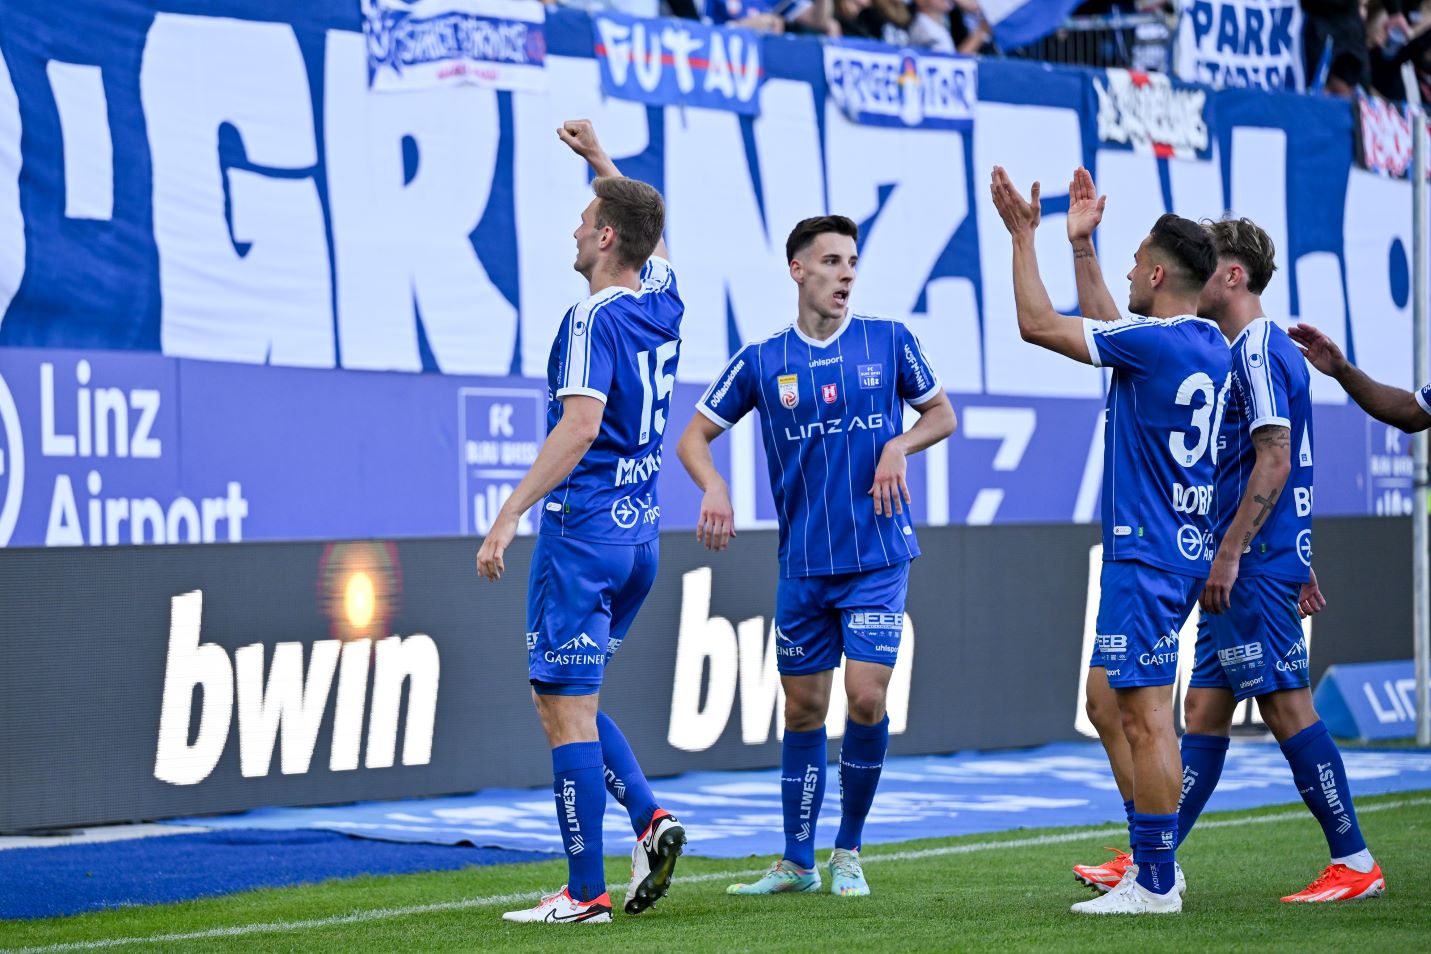 FC Blau-Weiß Linz also remained on the winning road against WSG Tirol – Bundesliga